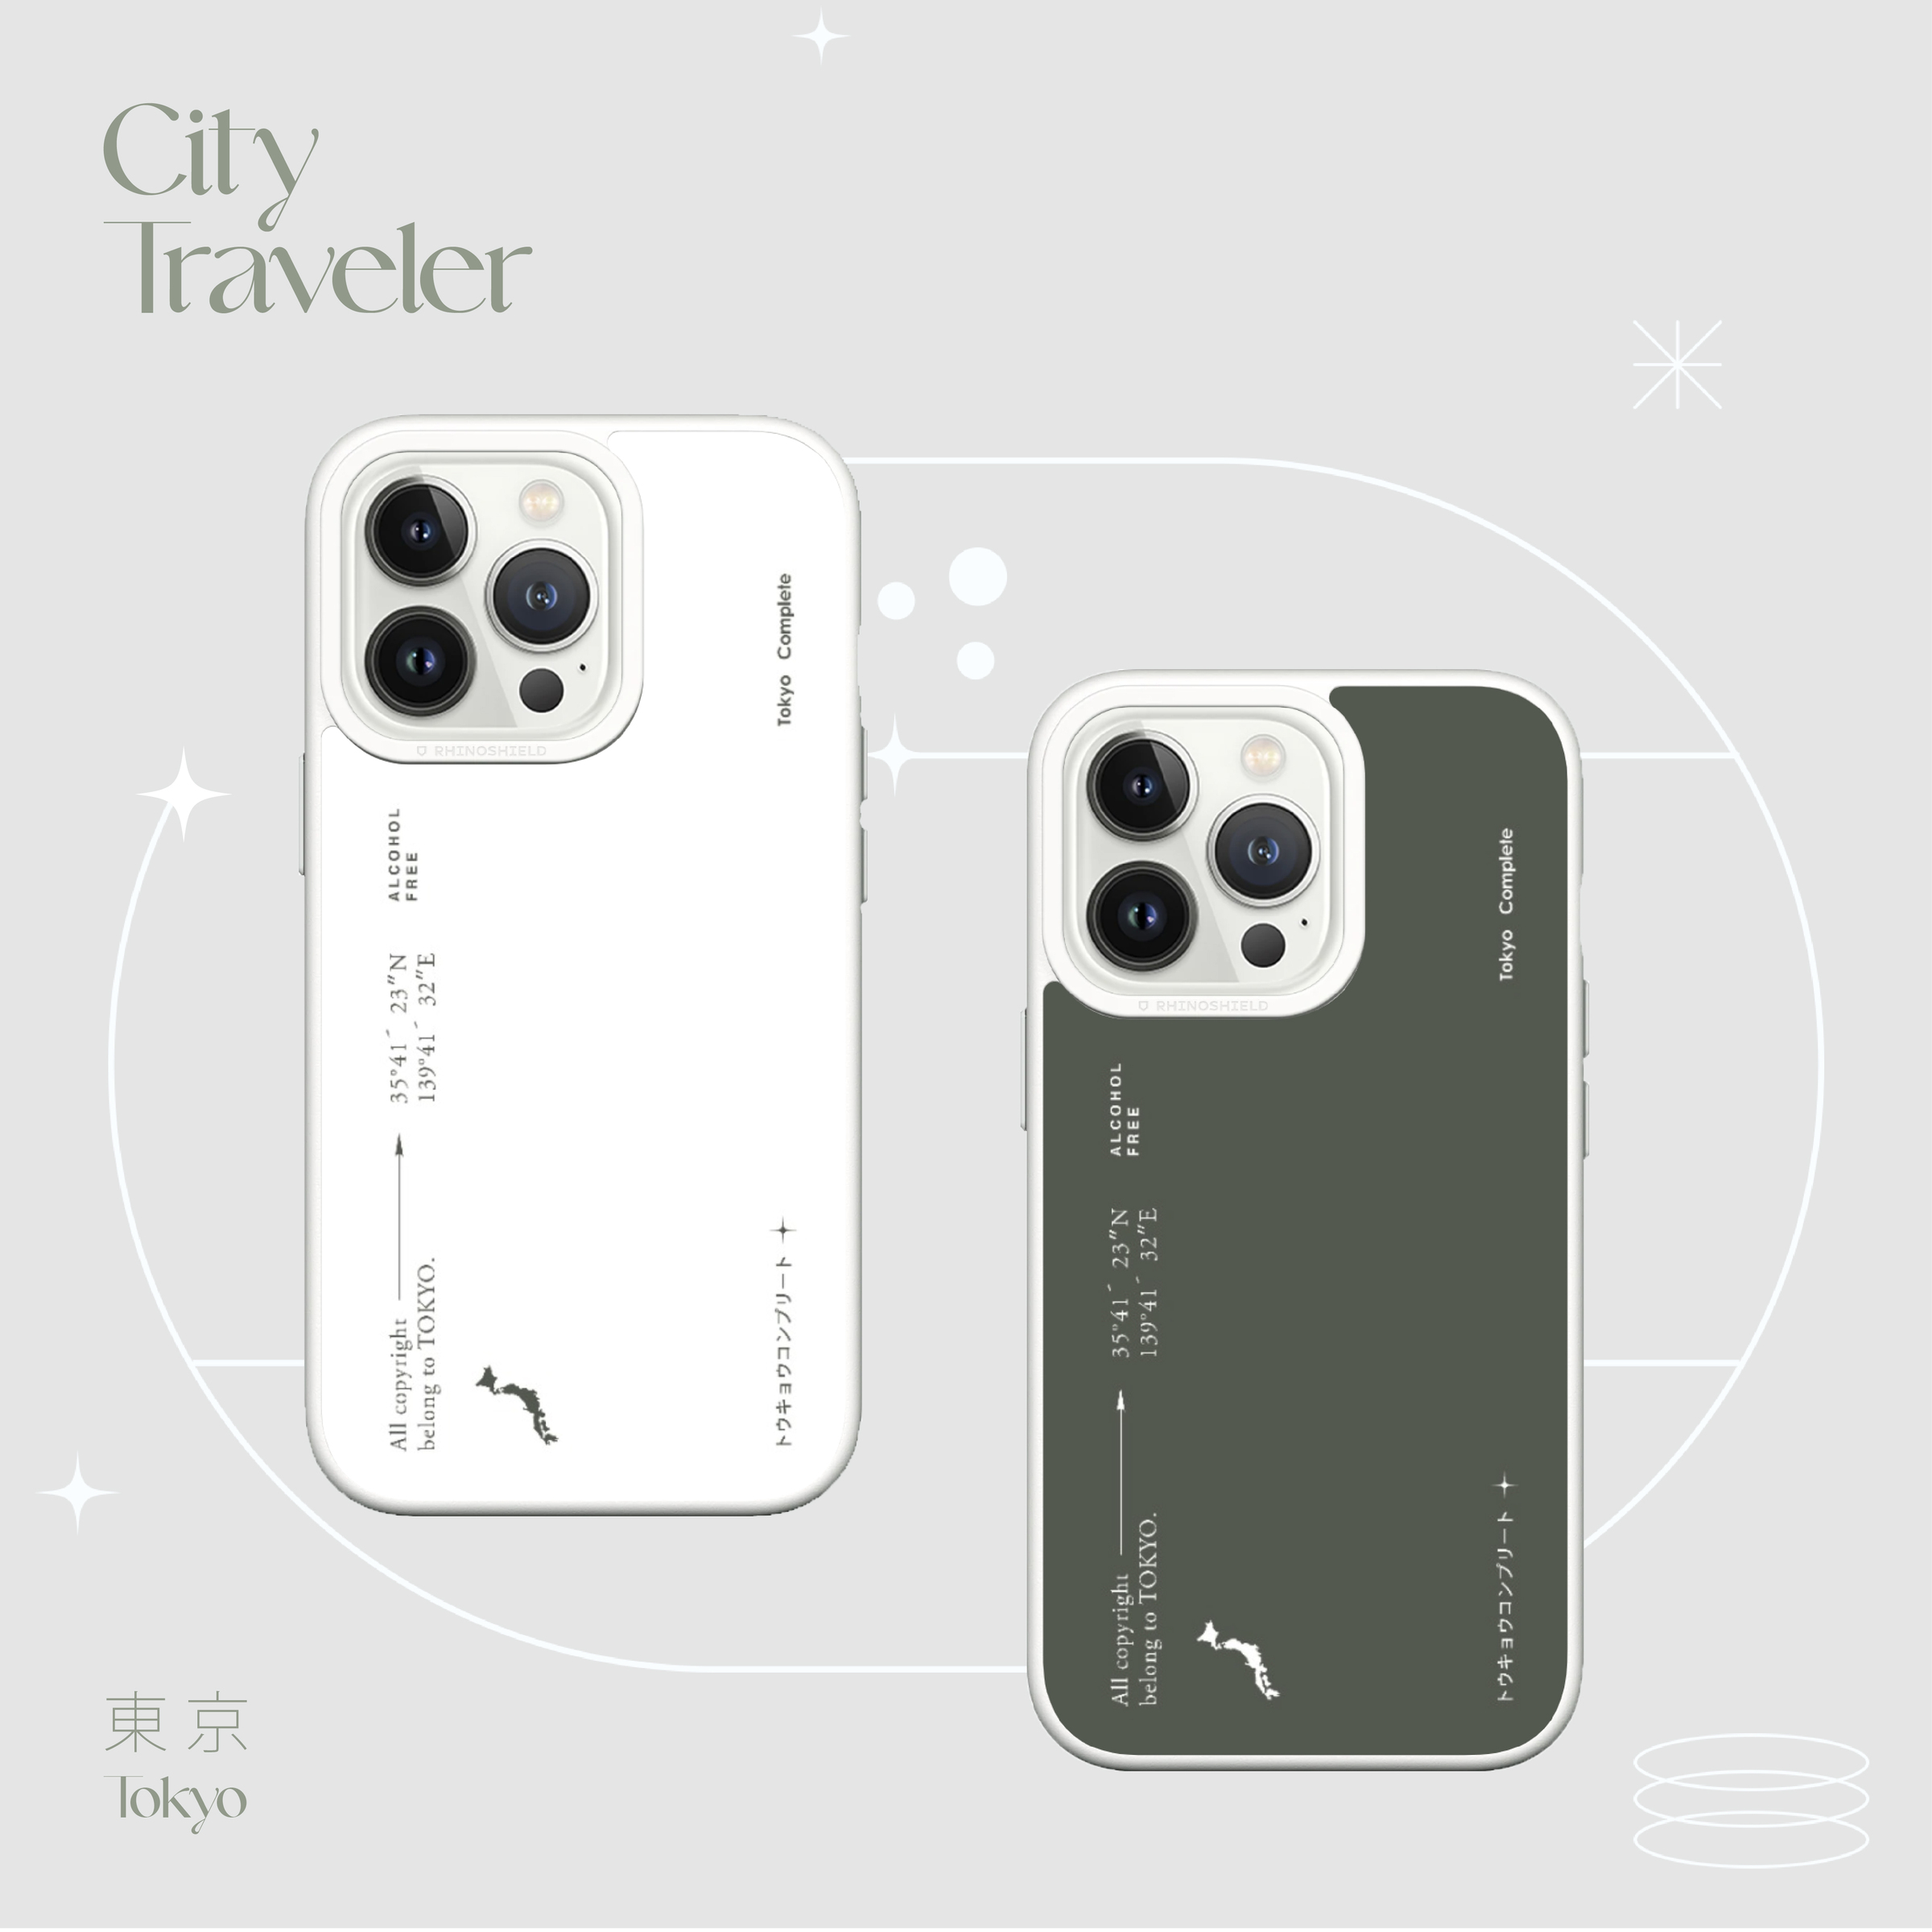 City Traveler - Tokyo